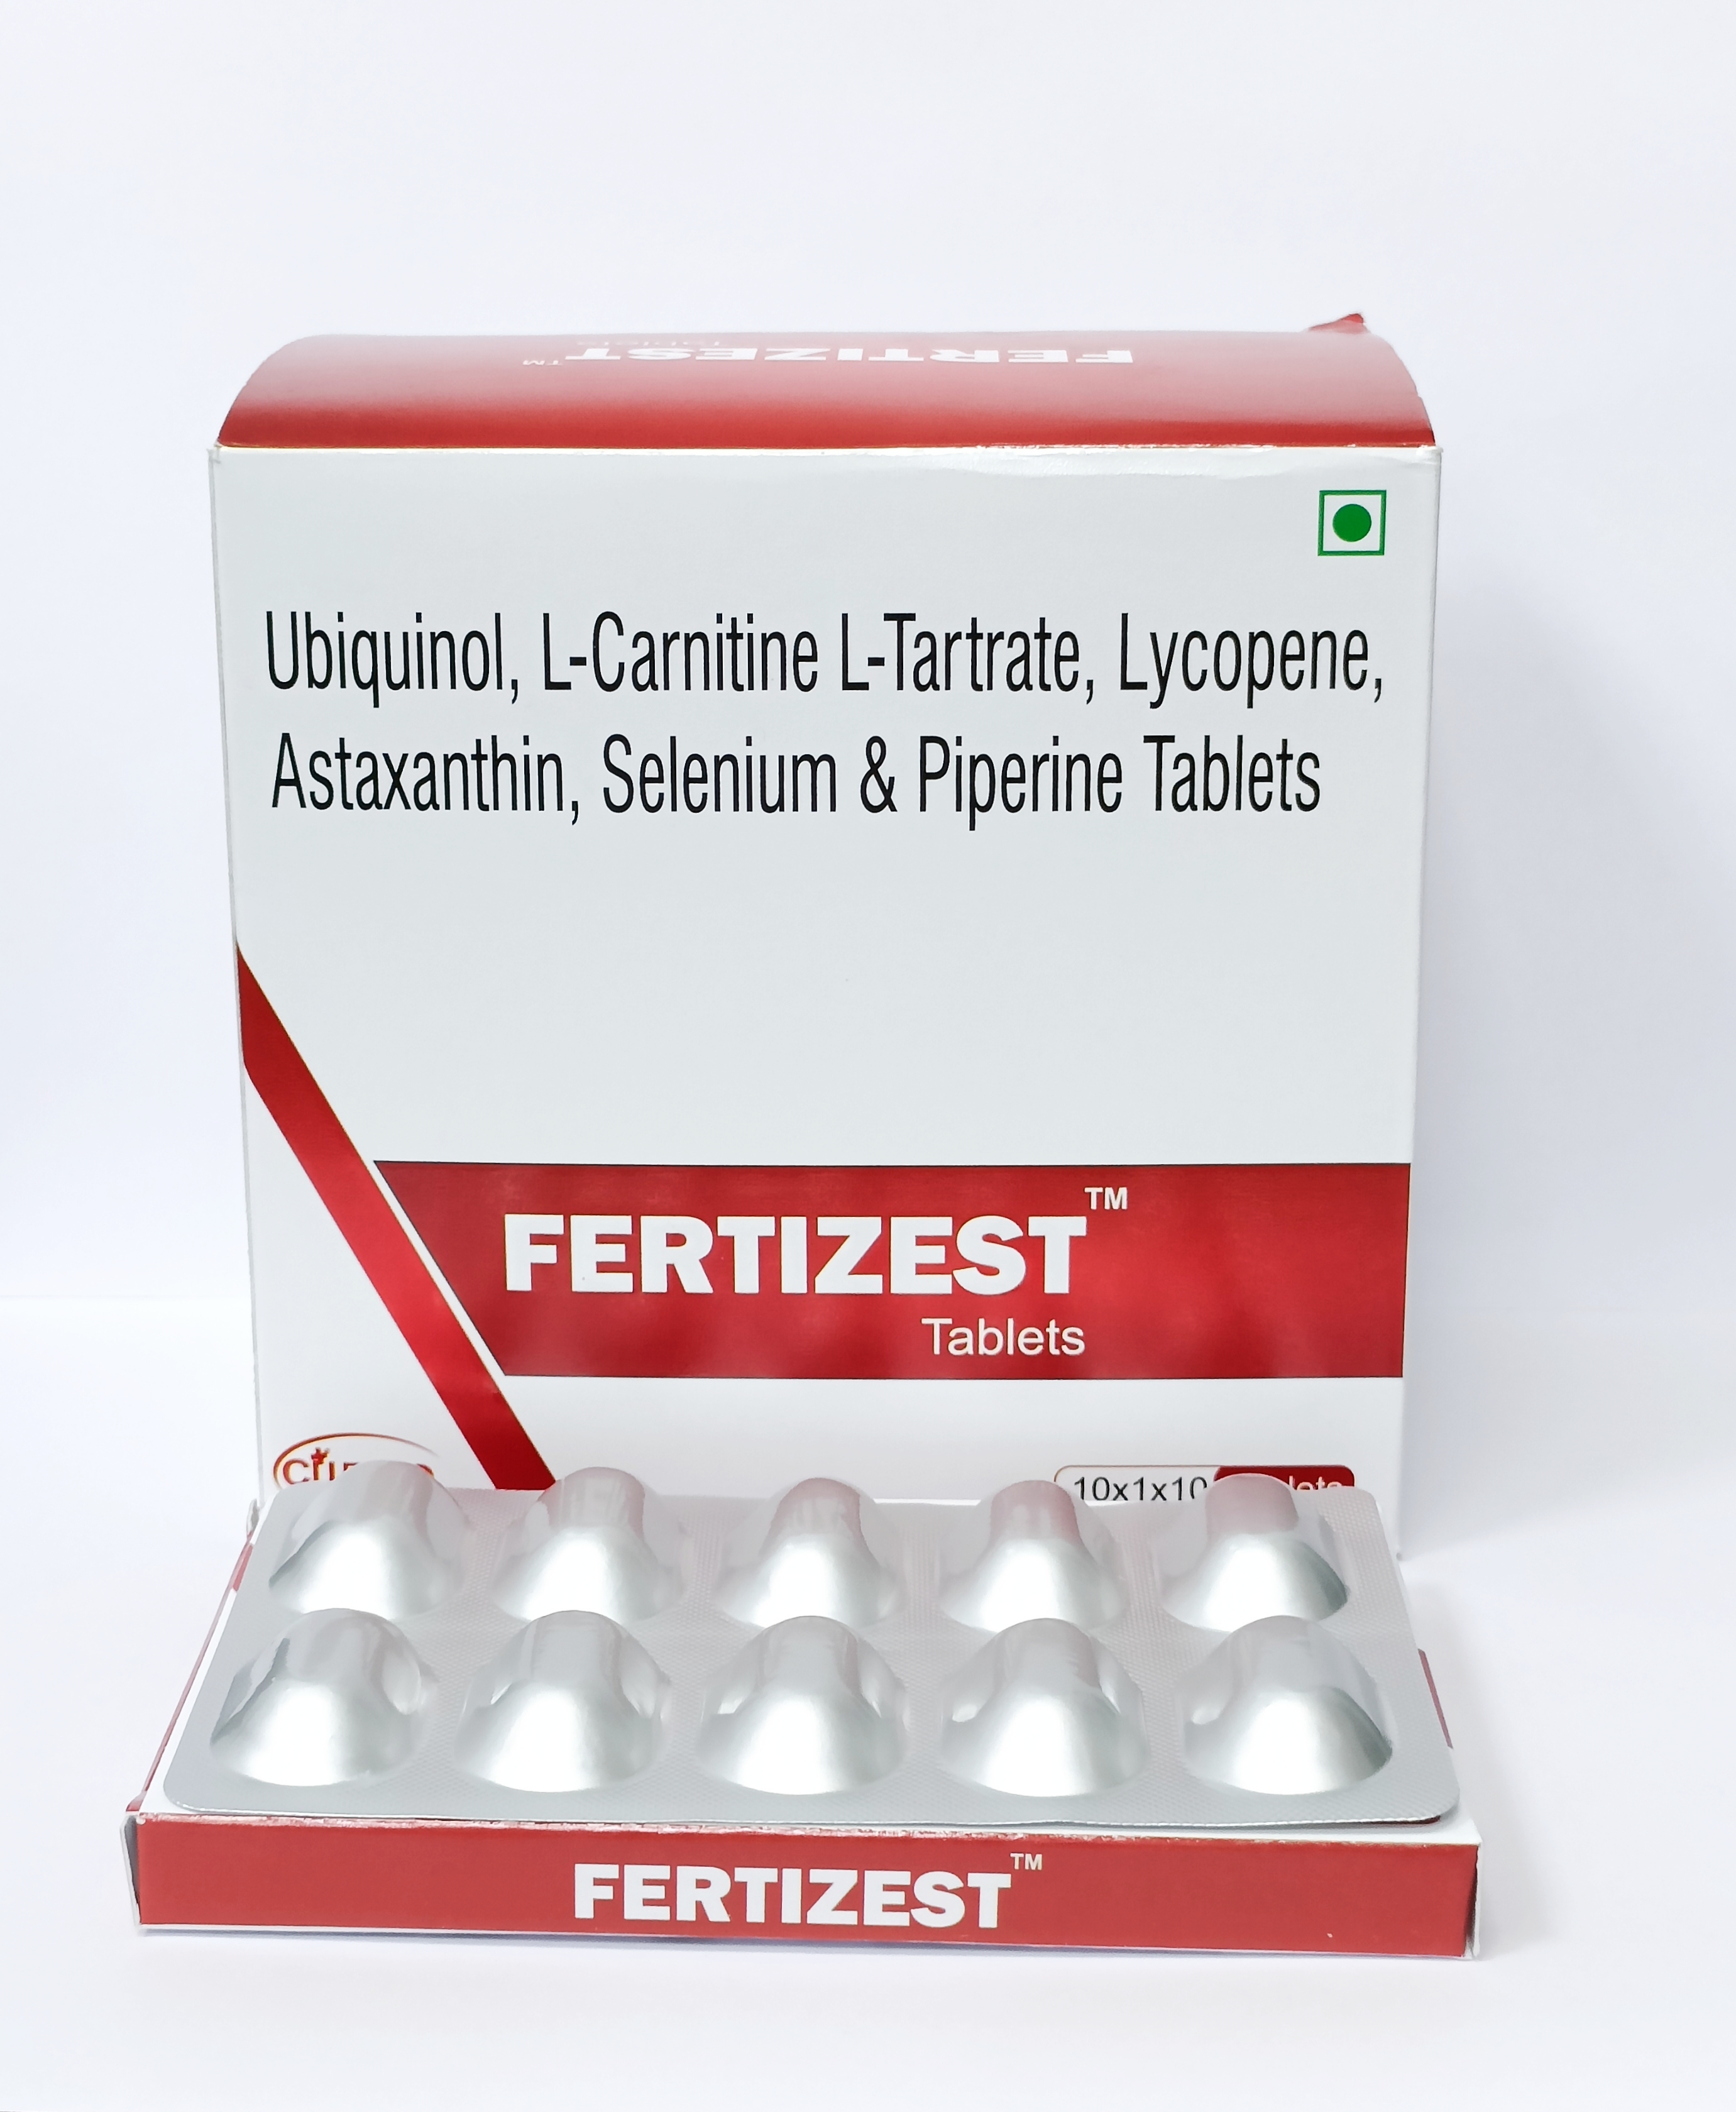 Ubiquinol L-Carnitine L-Tartrate Lycopene and Piperine Tablets